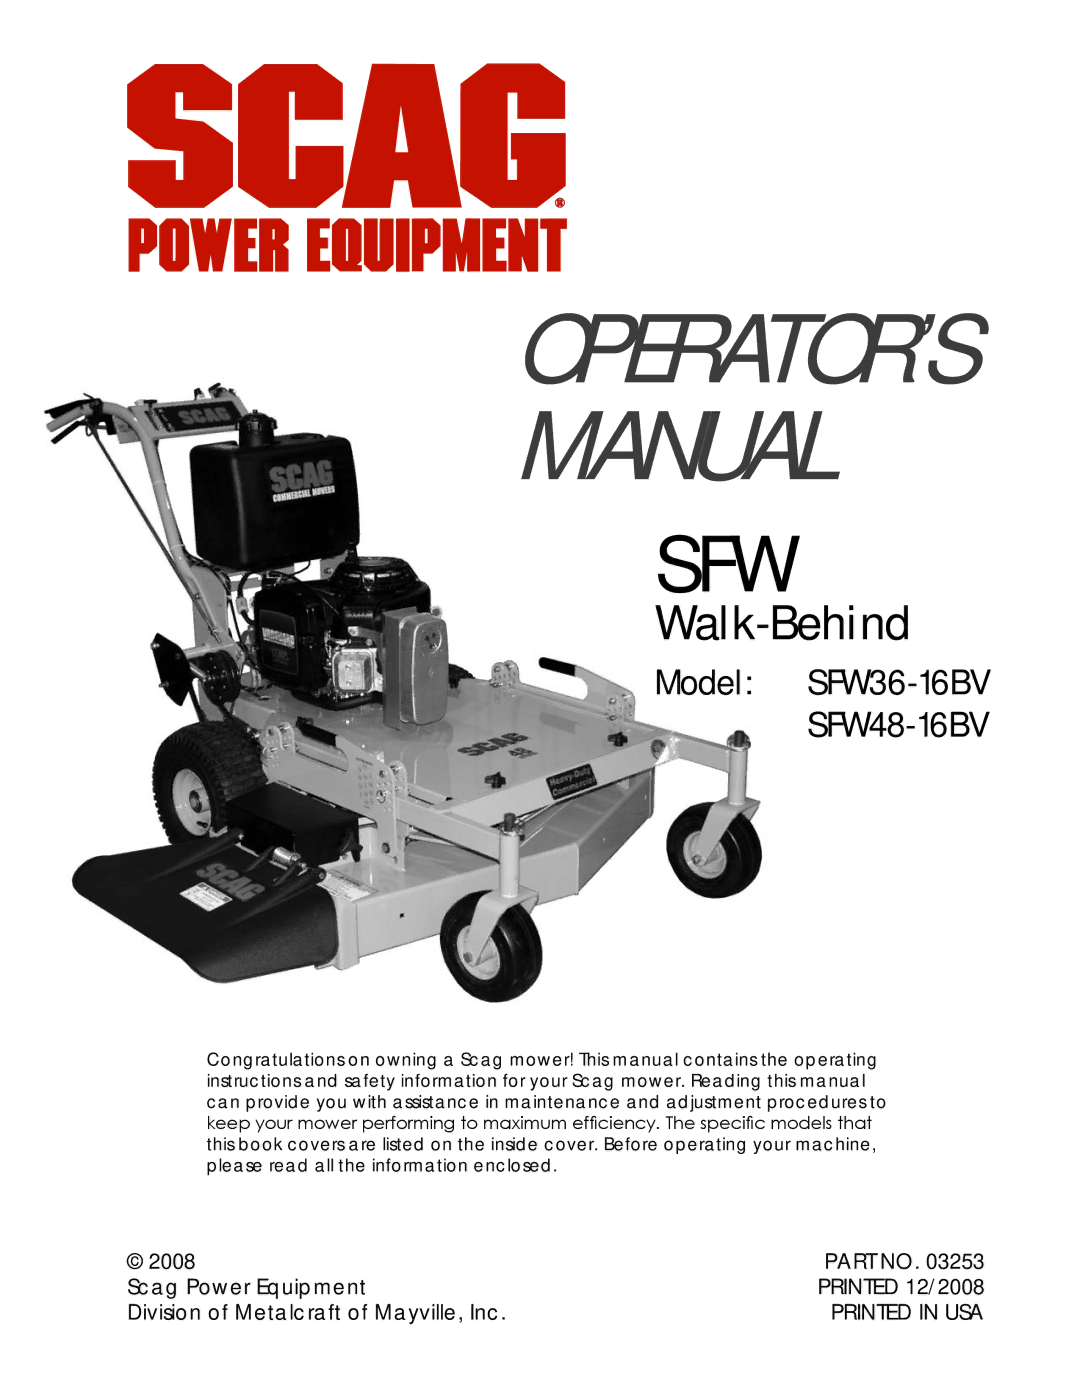 Scag Power Equipment SFW36-16BV manual OPERATOR’S Manual 